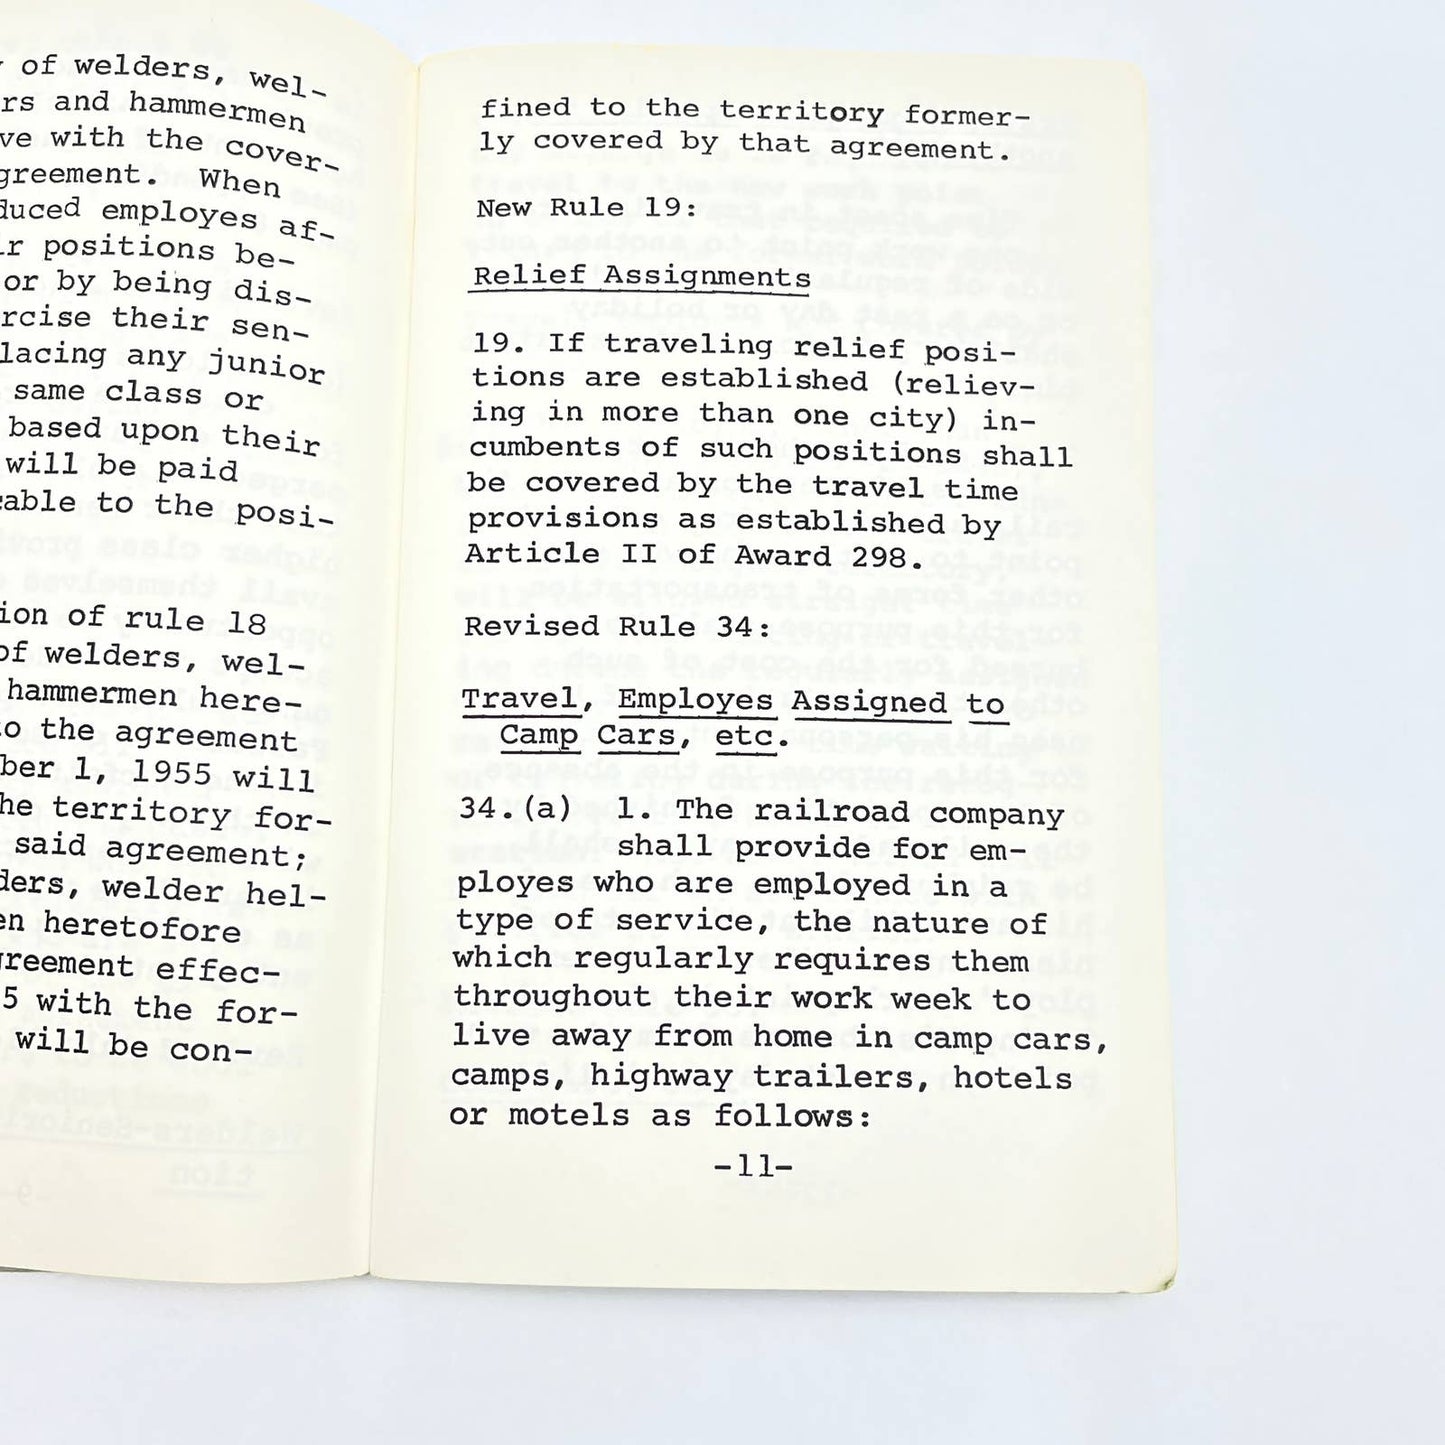 1955-70 Chicago Northwestern Railway Memorandum Agreement Booklet TG2